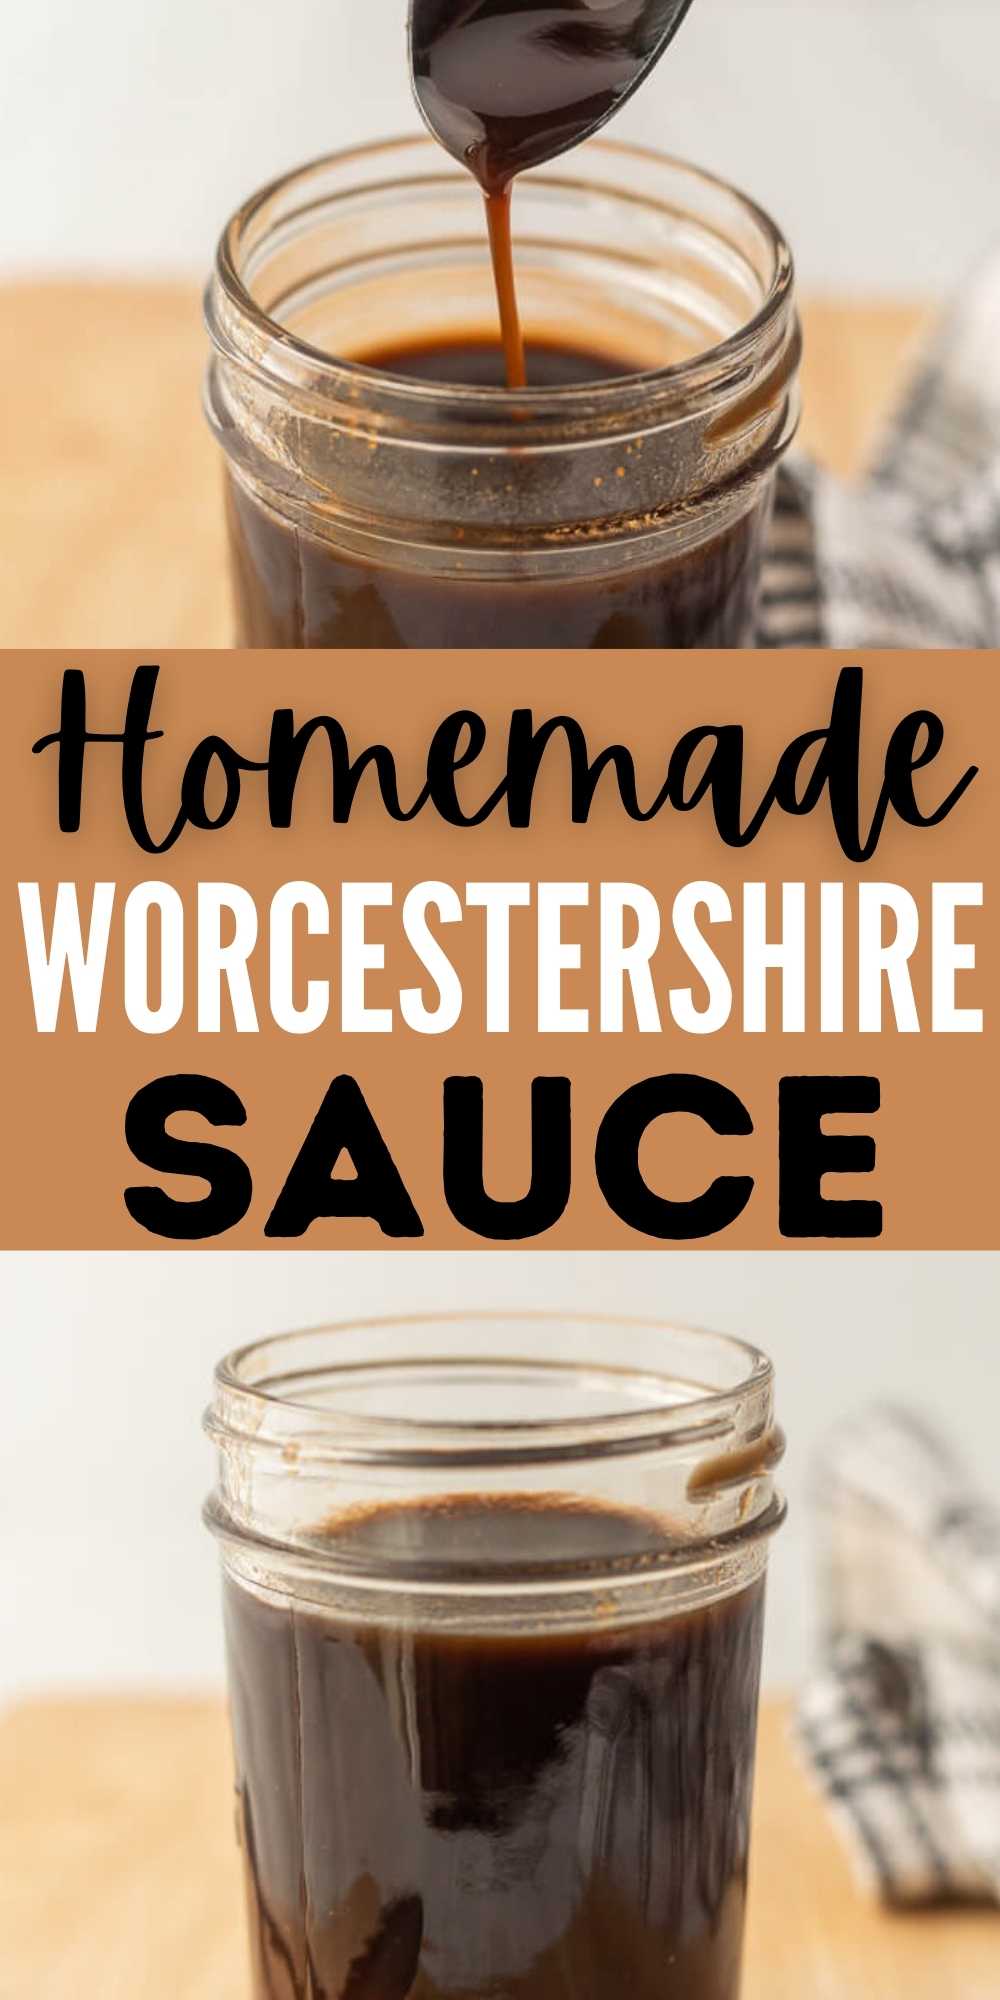 Ingredient: Worcestershire sauce @recipeland